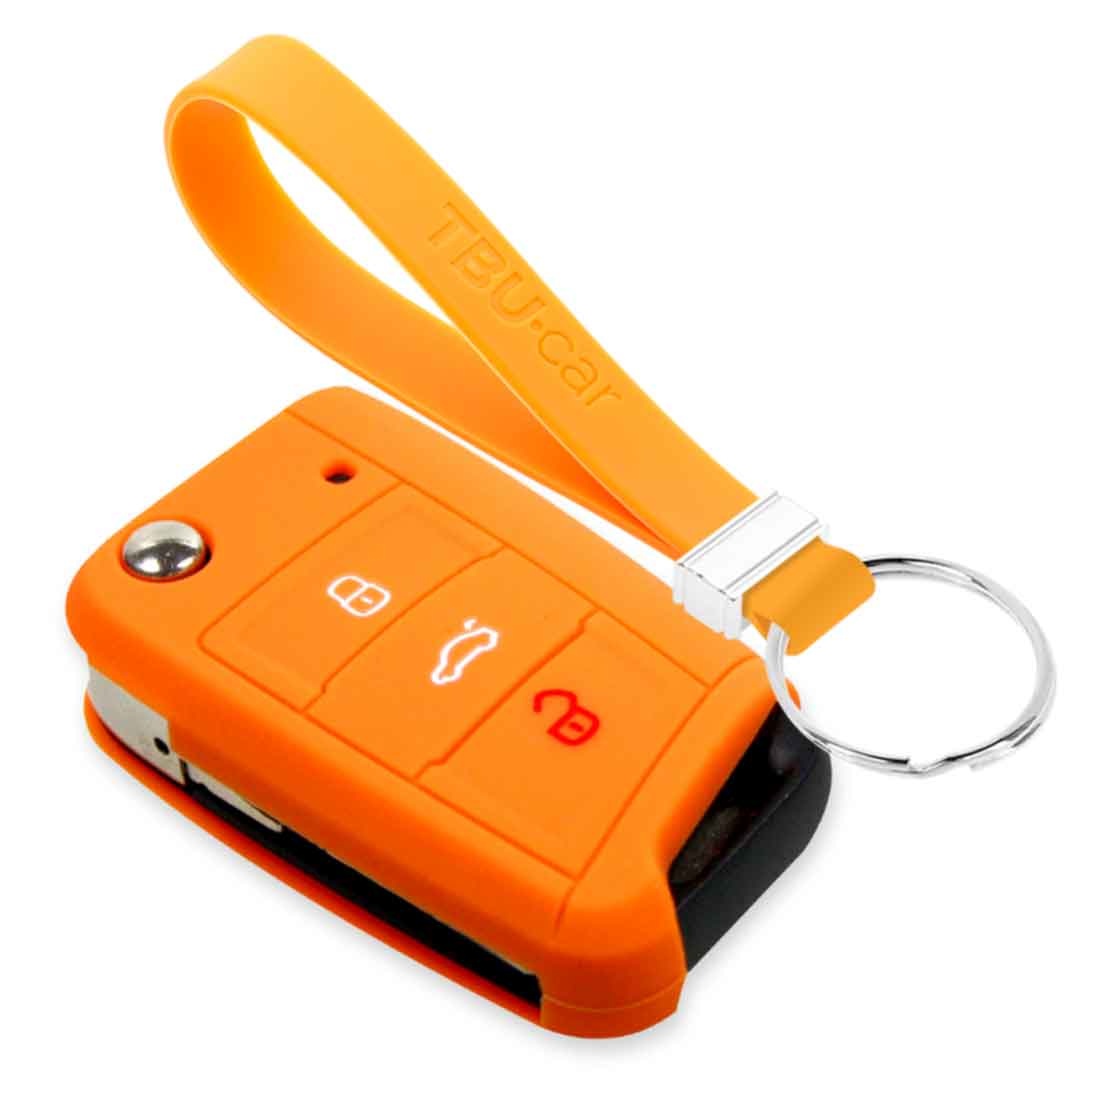 TBU car TBU car Sleutel cover compatibel met Skoda - Silicone sleutelhoesje - beschermhoesje autosleutel - Oranje